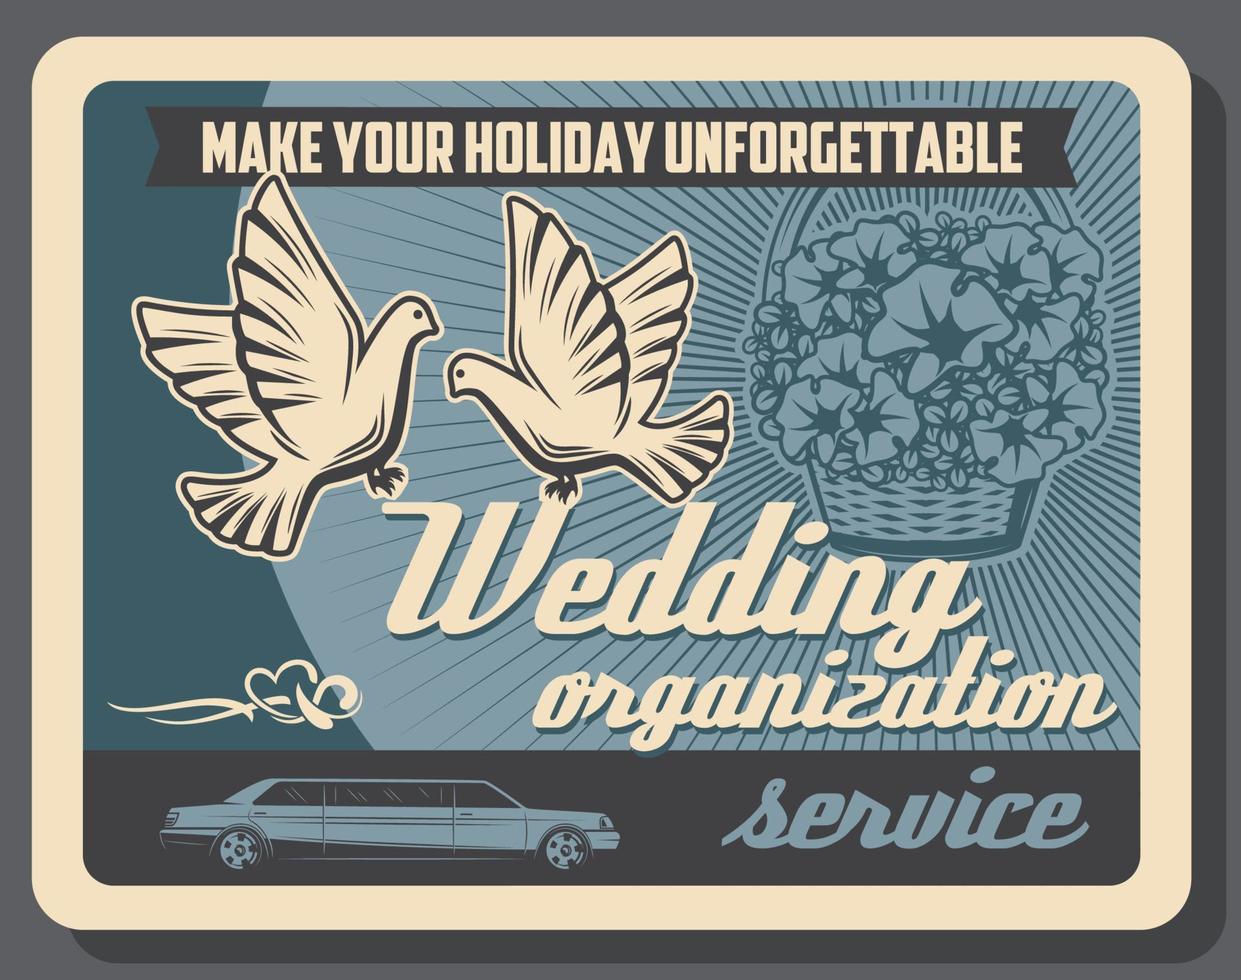 Wedding organization, limousine and flower service vector